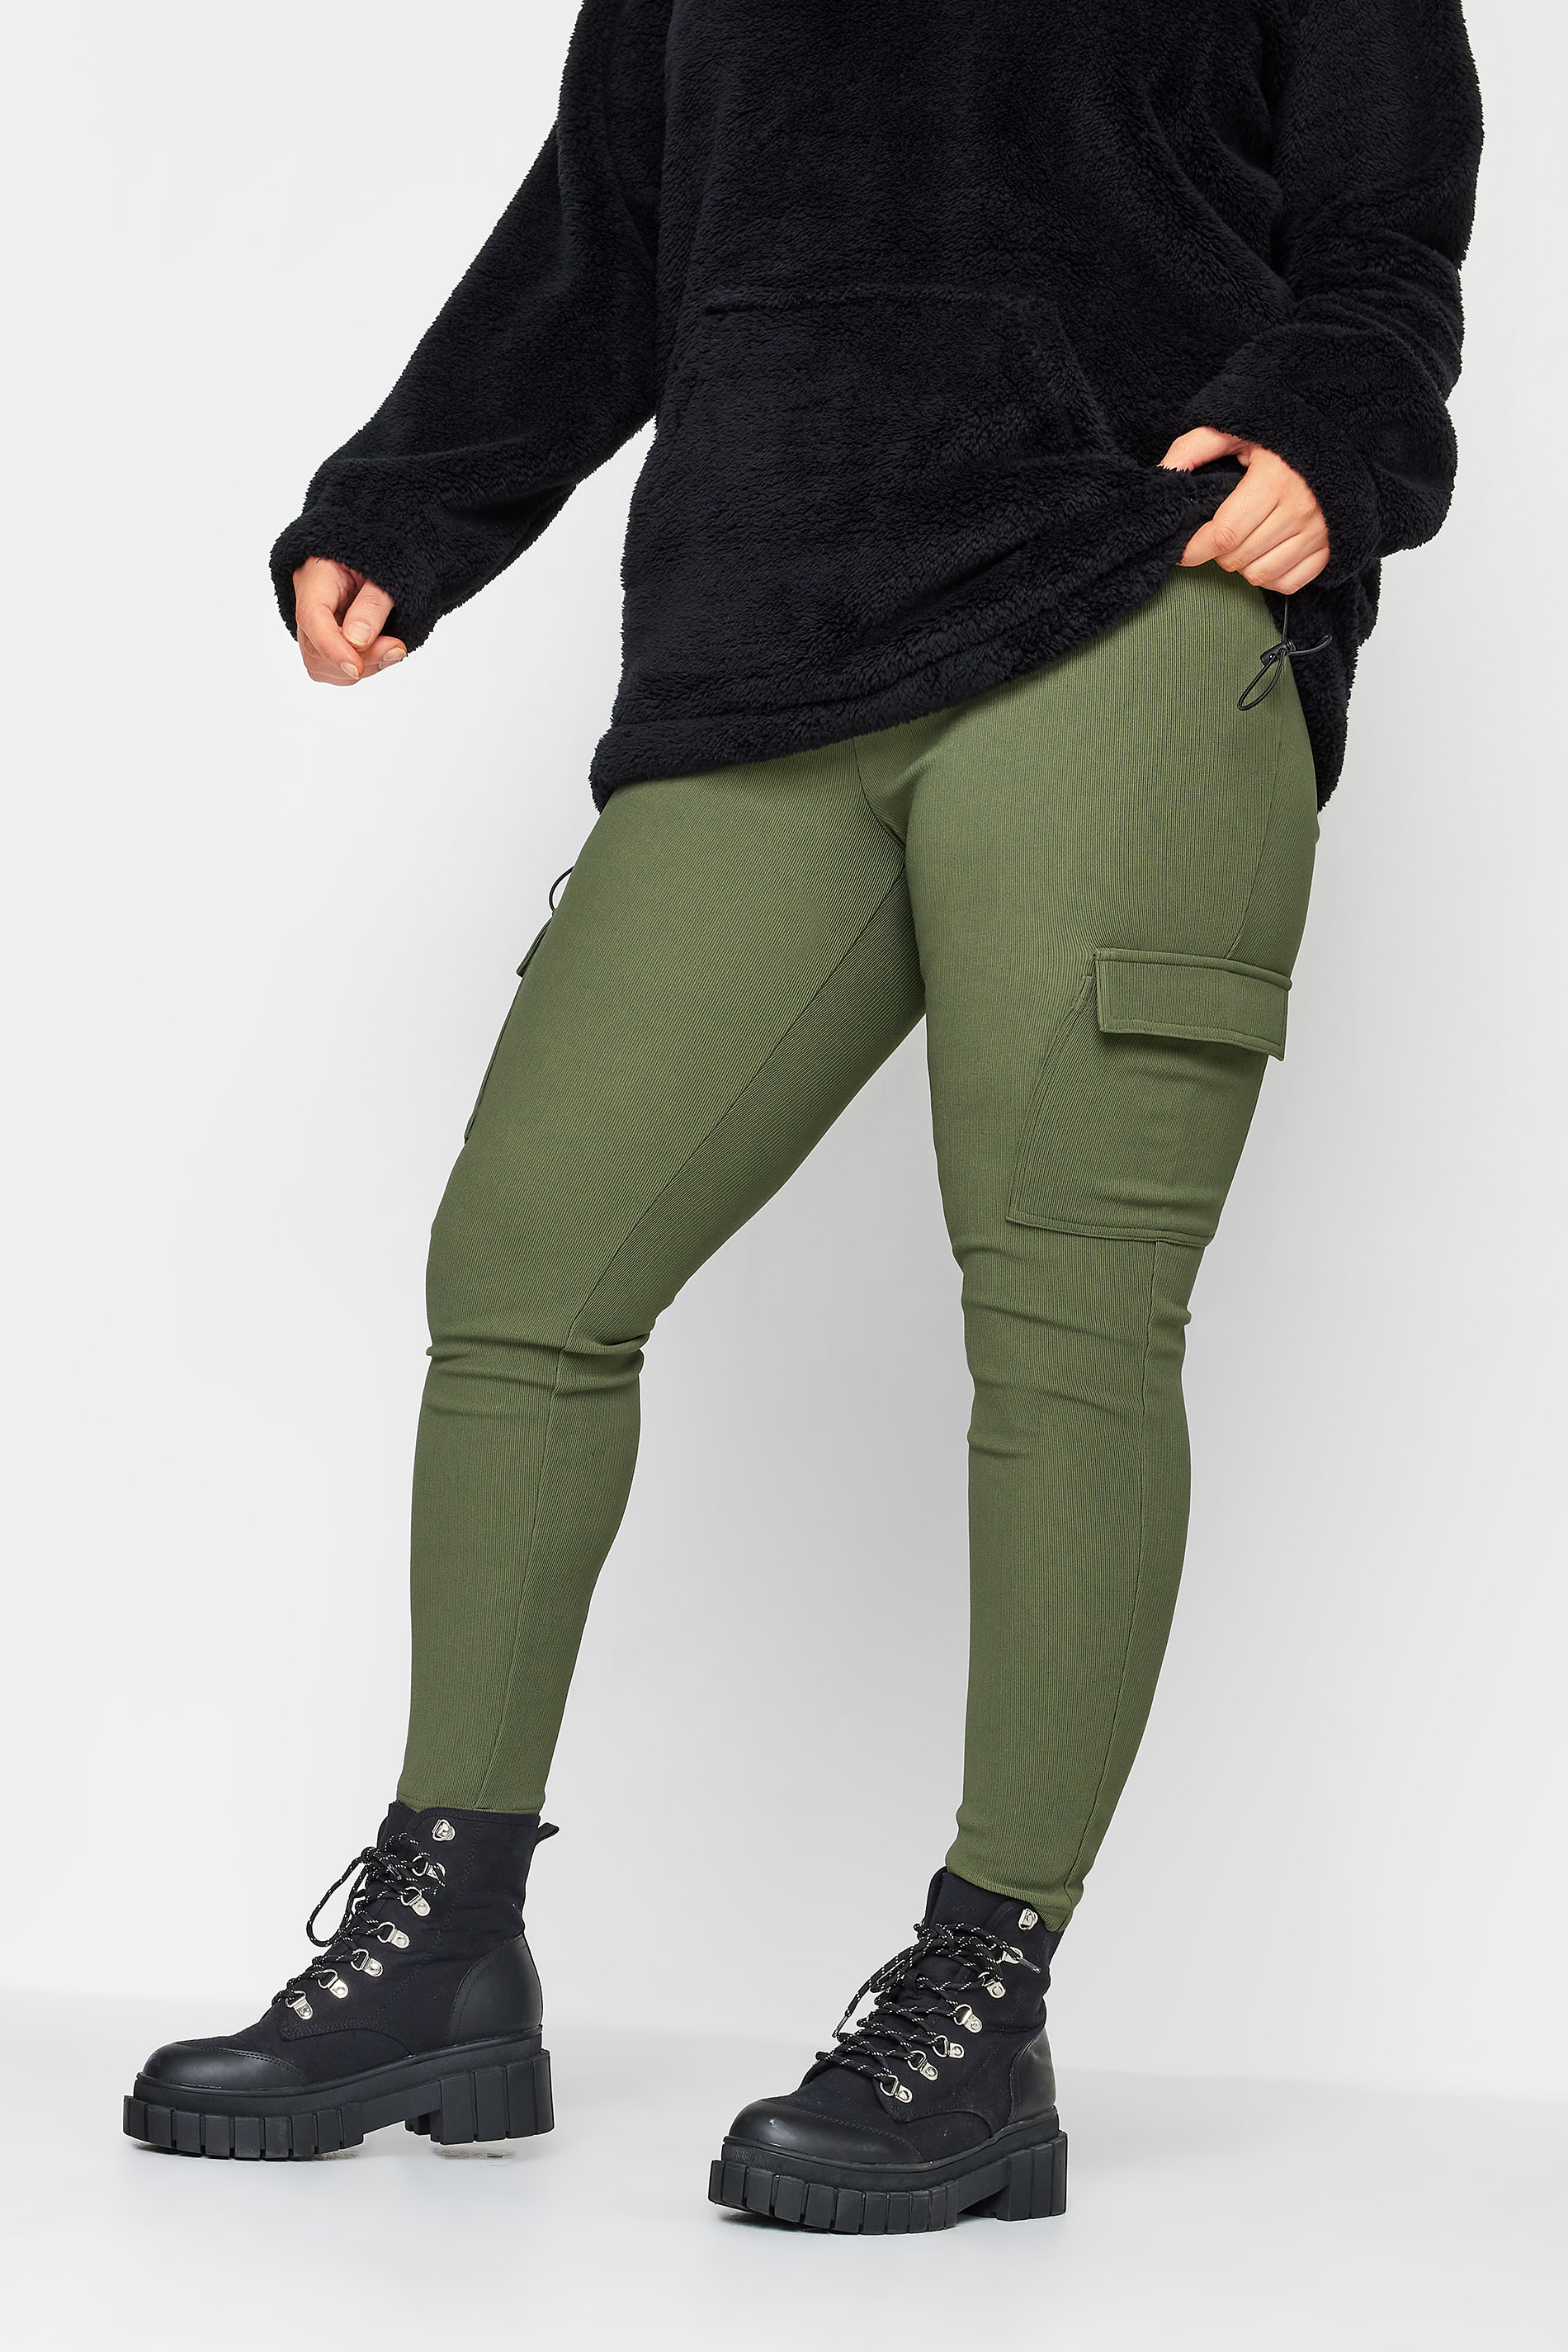 YOURS Plus Size Khaki Green Cargo Leggings | Yours Clothing 2